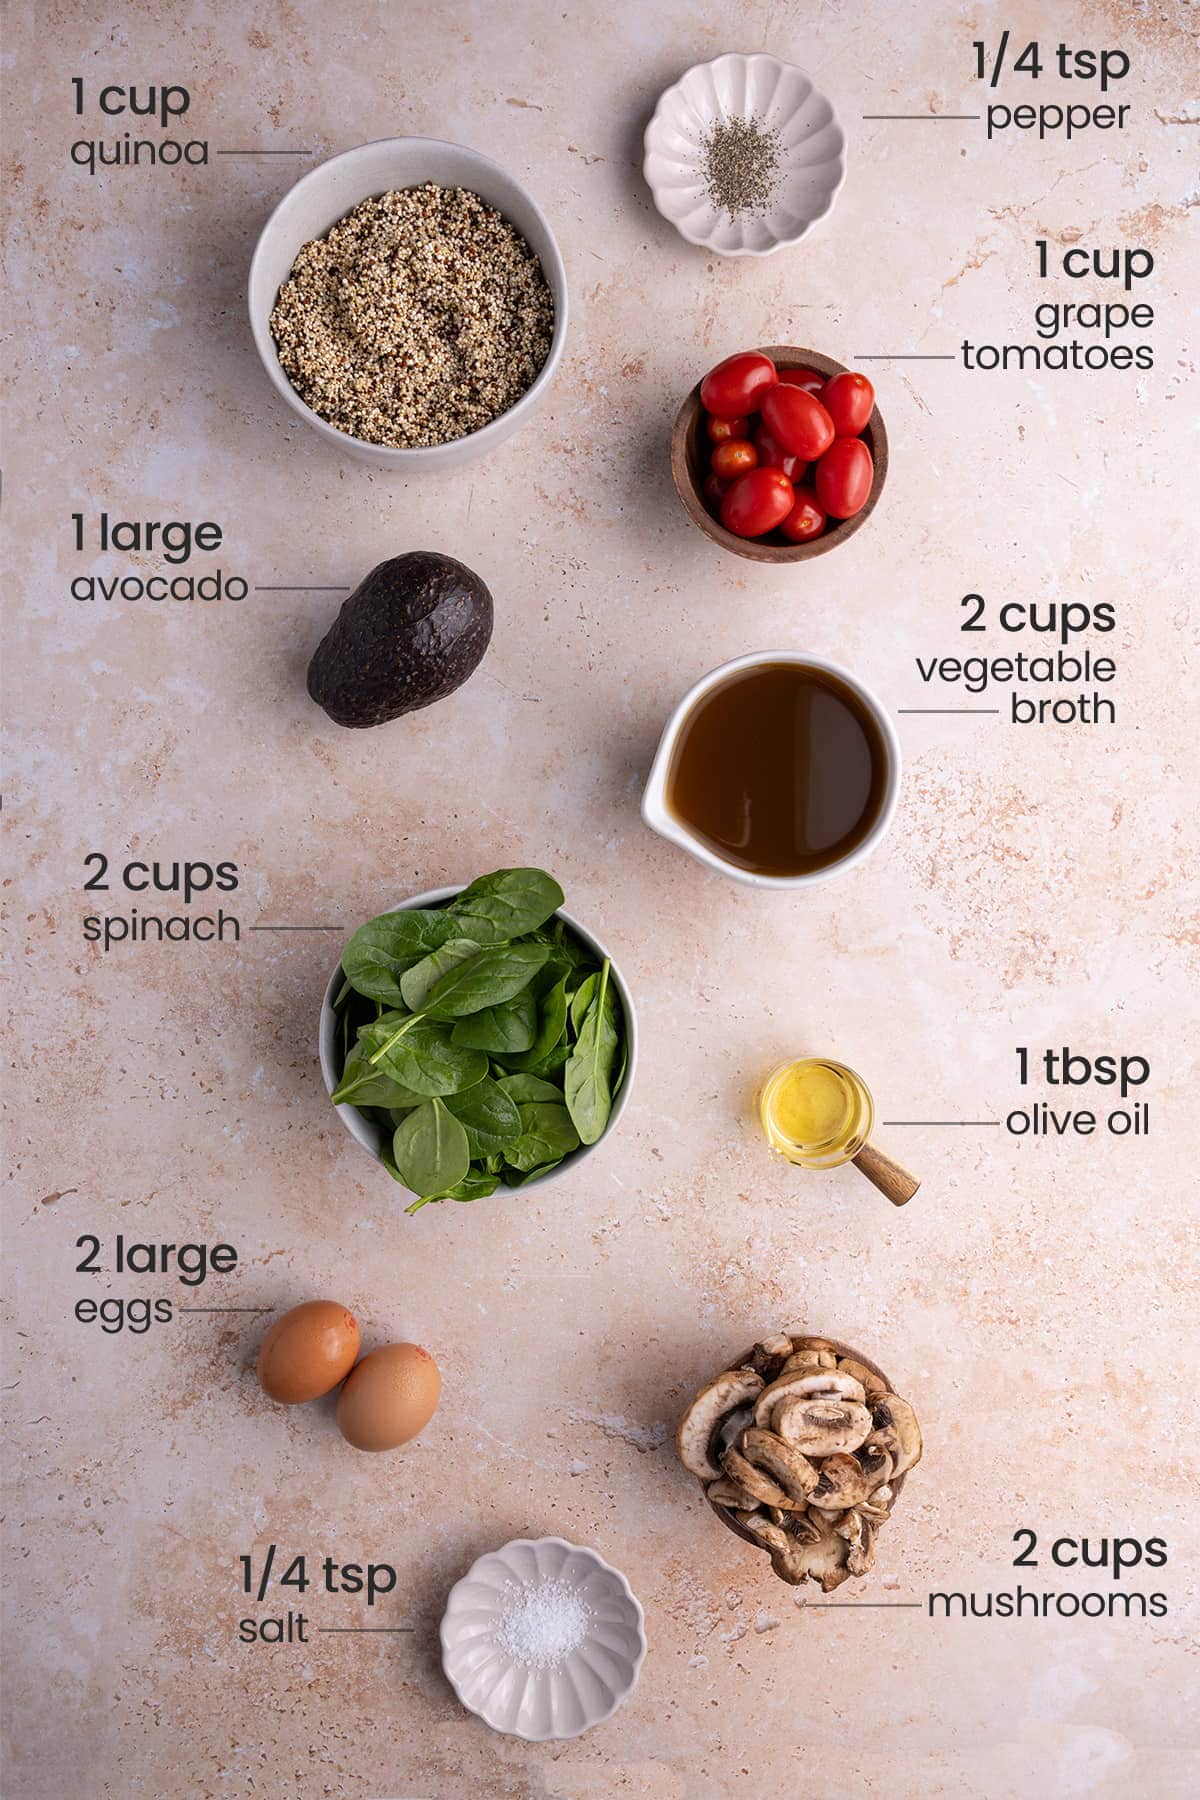 ingredients for quinoa breakfast bowl - pepper, grape tomatoes, quinoa, avocado, vegetable broth, spinach, olive oil, eggs, salt, mushrooms